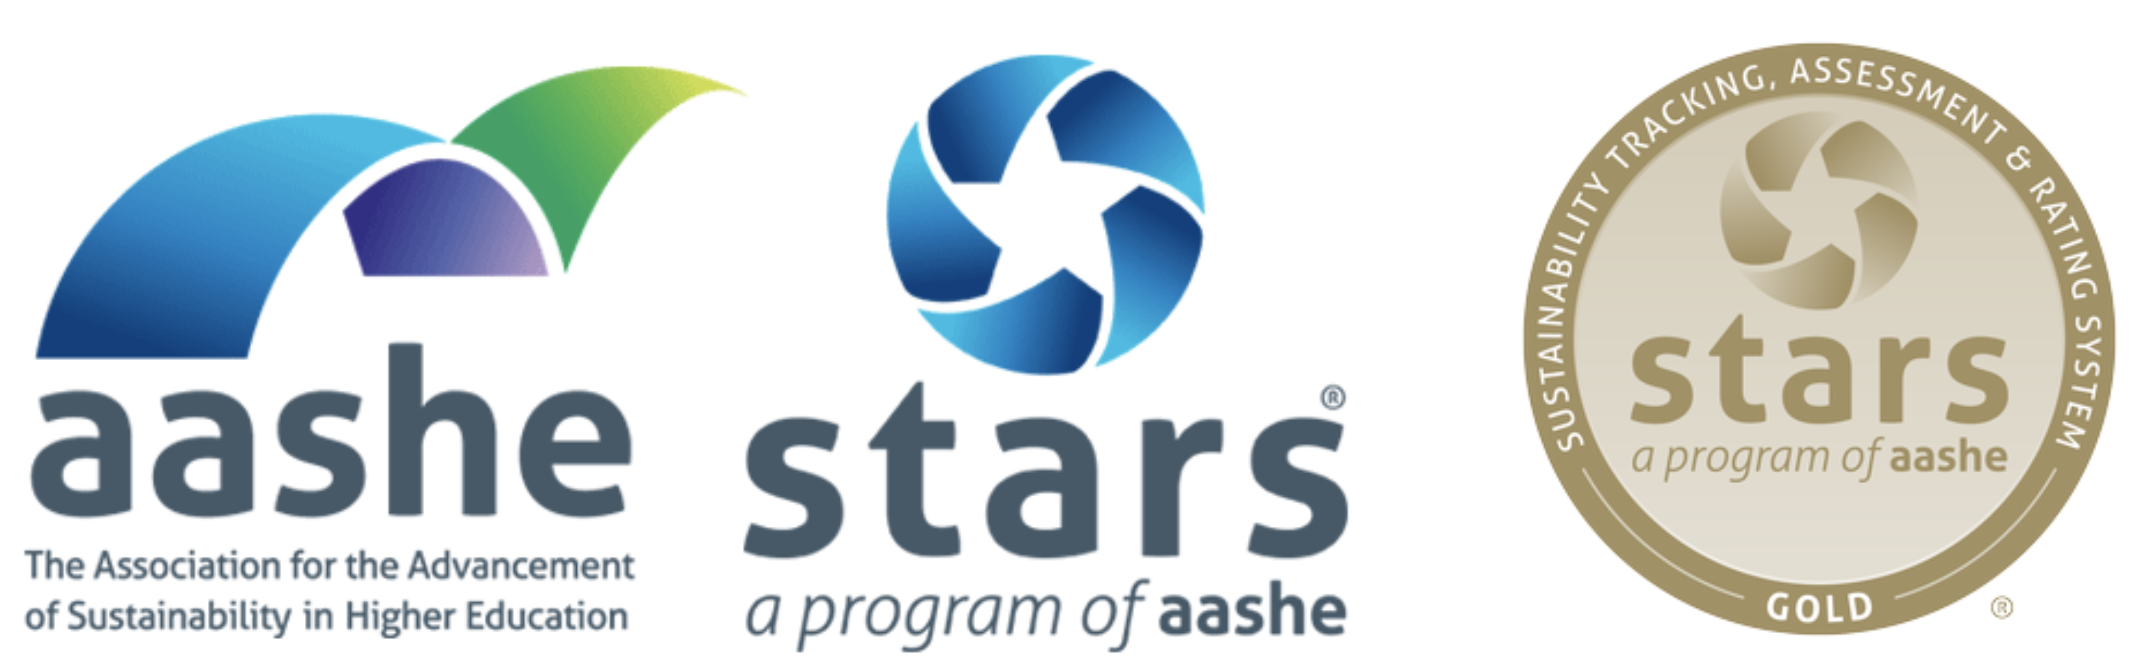 AASHE STARS Gold Rating Logo